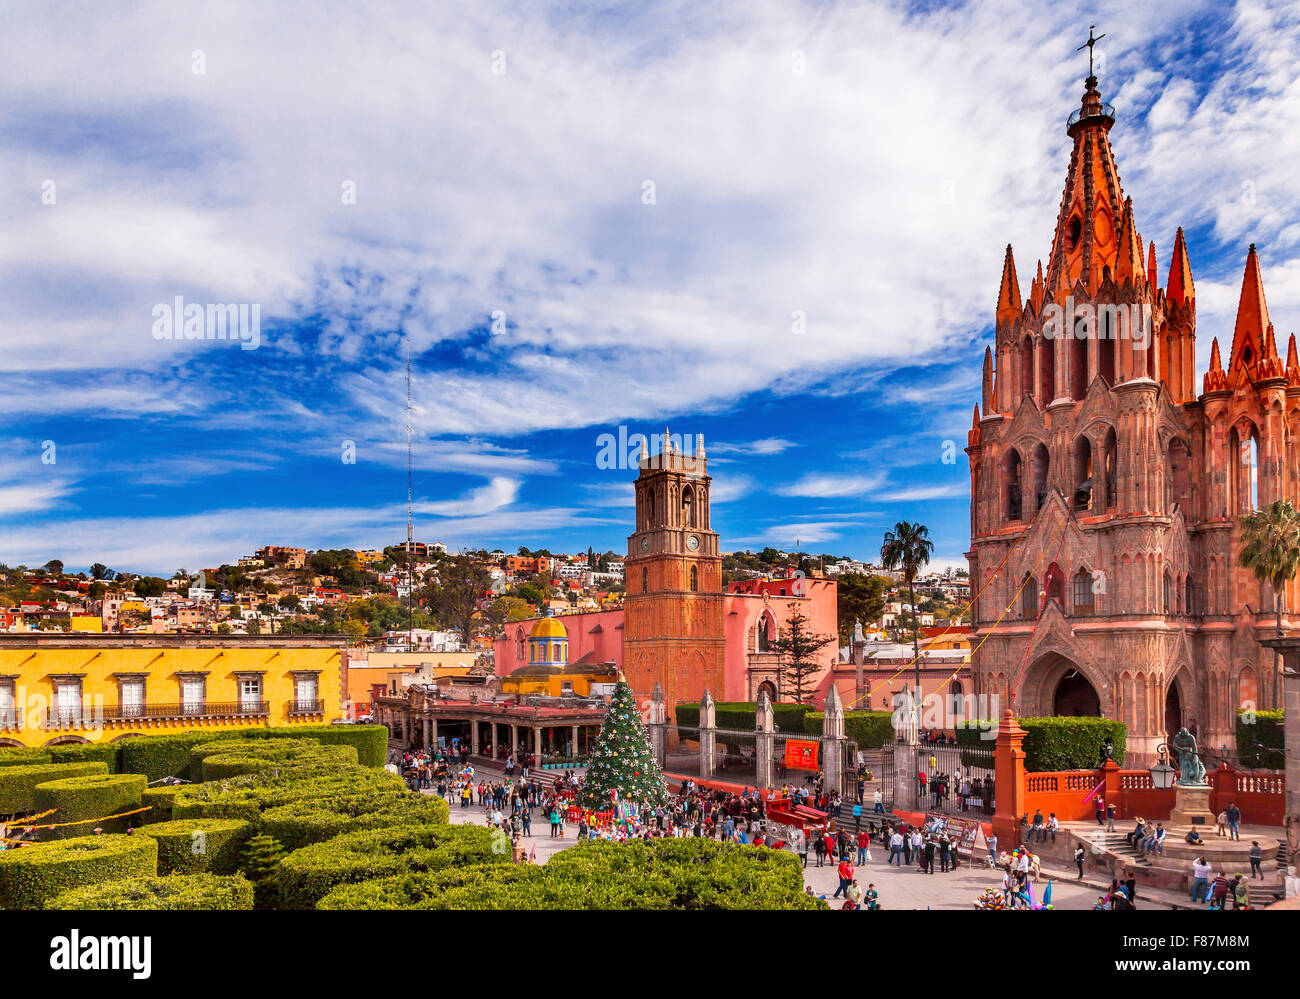 Parroquia Archangel church Jardin Town Square San Miguel de Allende, Mexico. Parroquia created in 1600s. Stock Photo